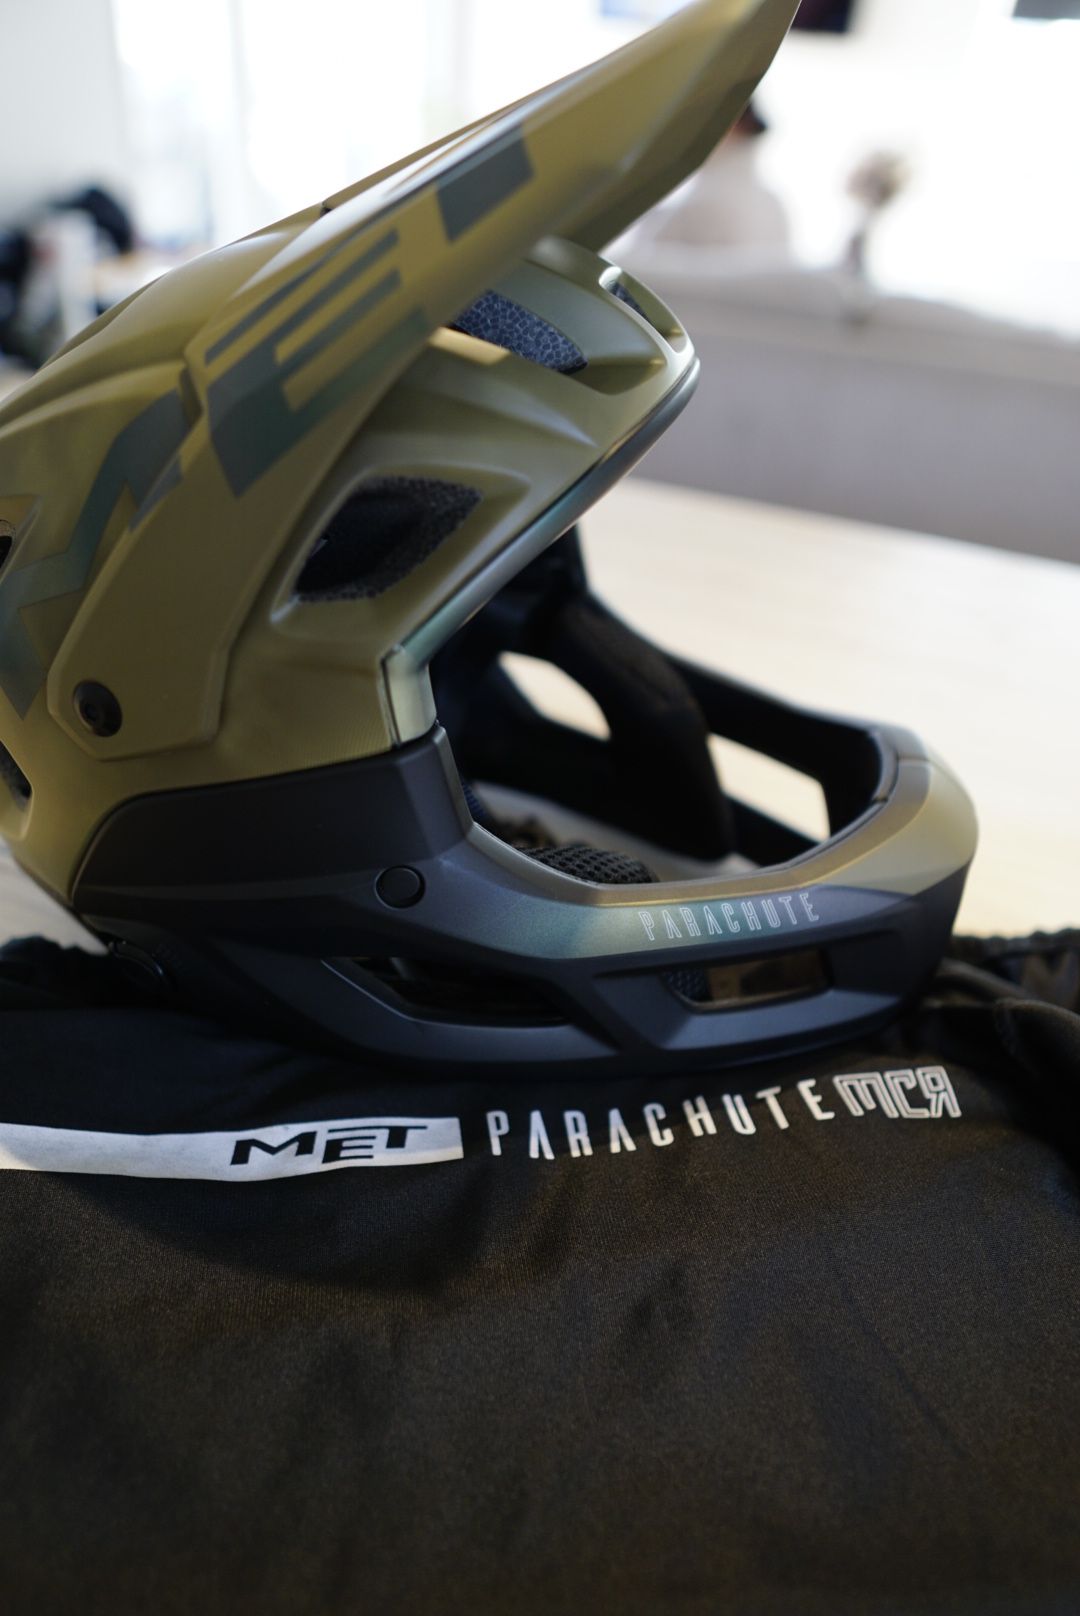 MET Parachute - Ride review